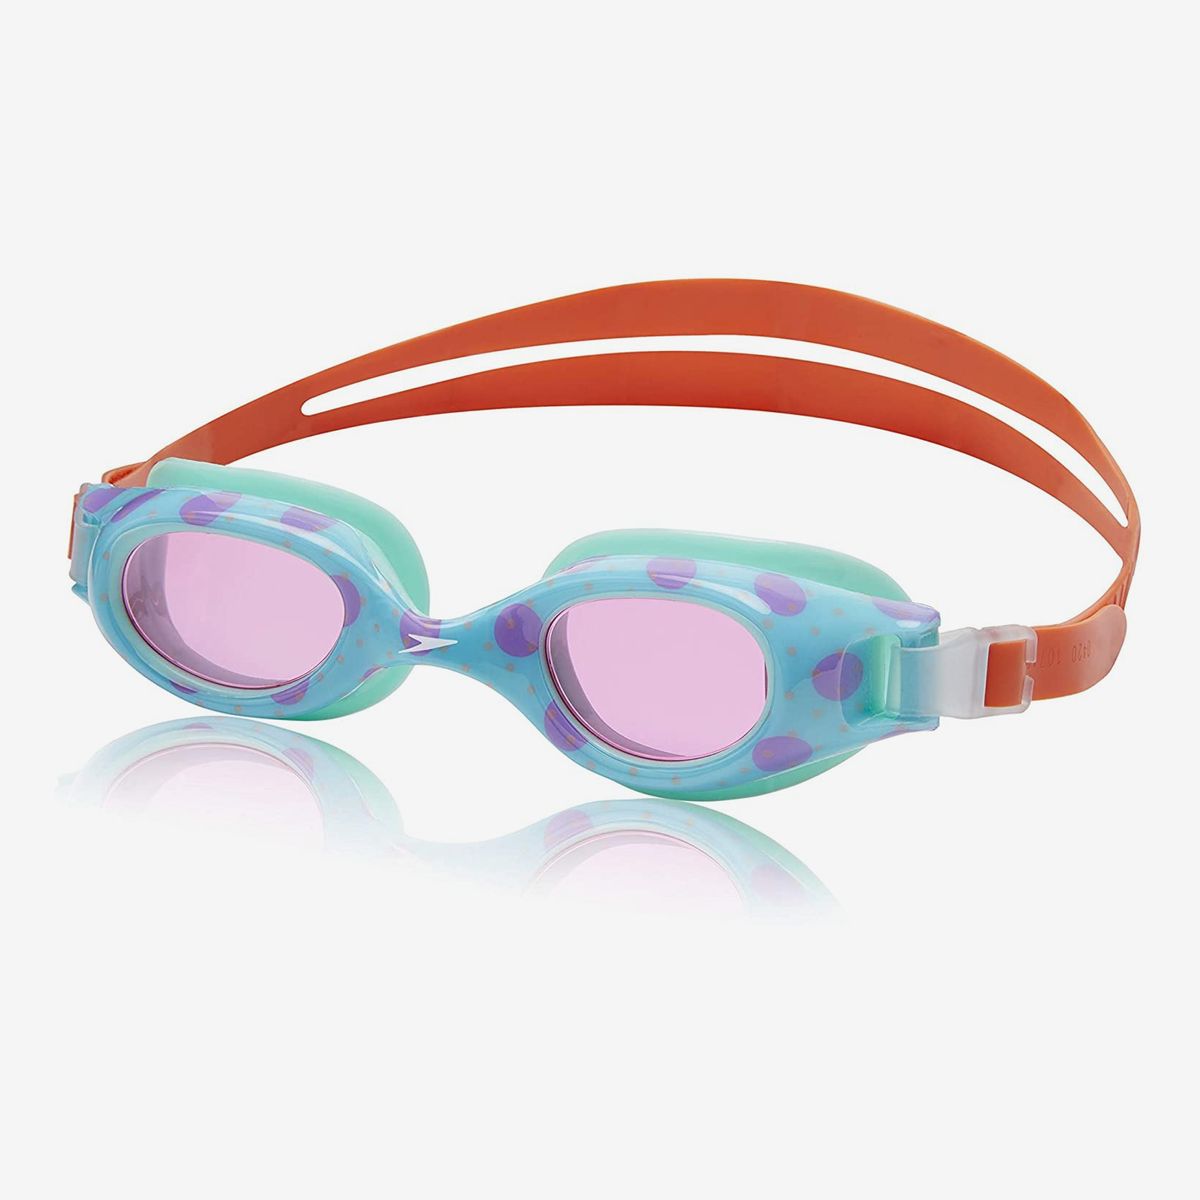 Adults Competition Swim Goggles Anti-Fog Beach Pool Swimwear Swimming Glasses 